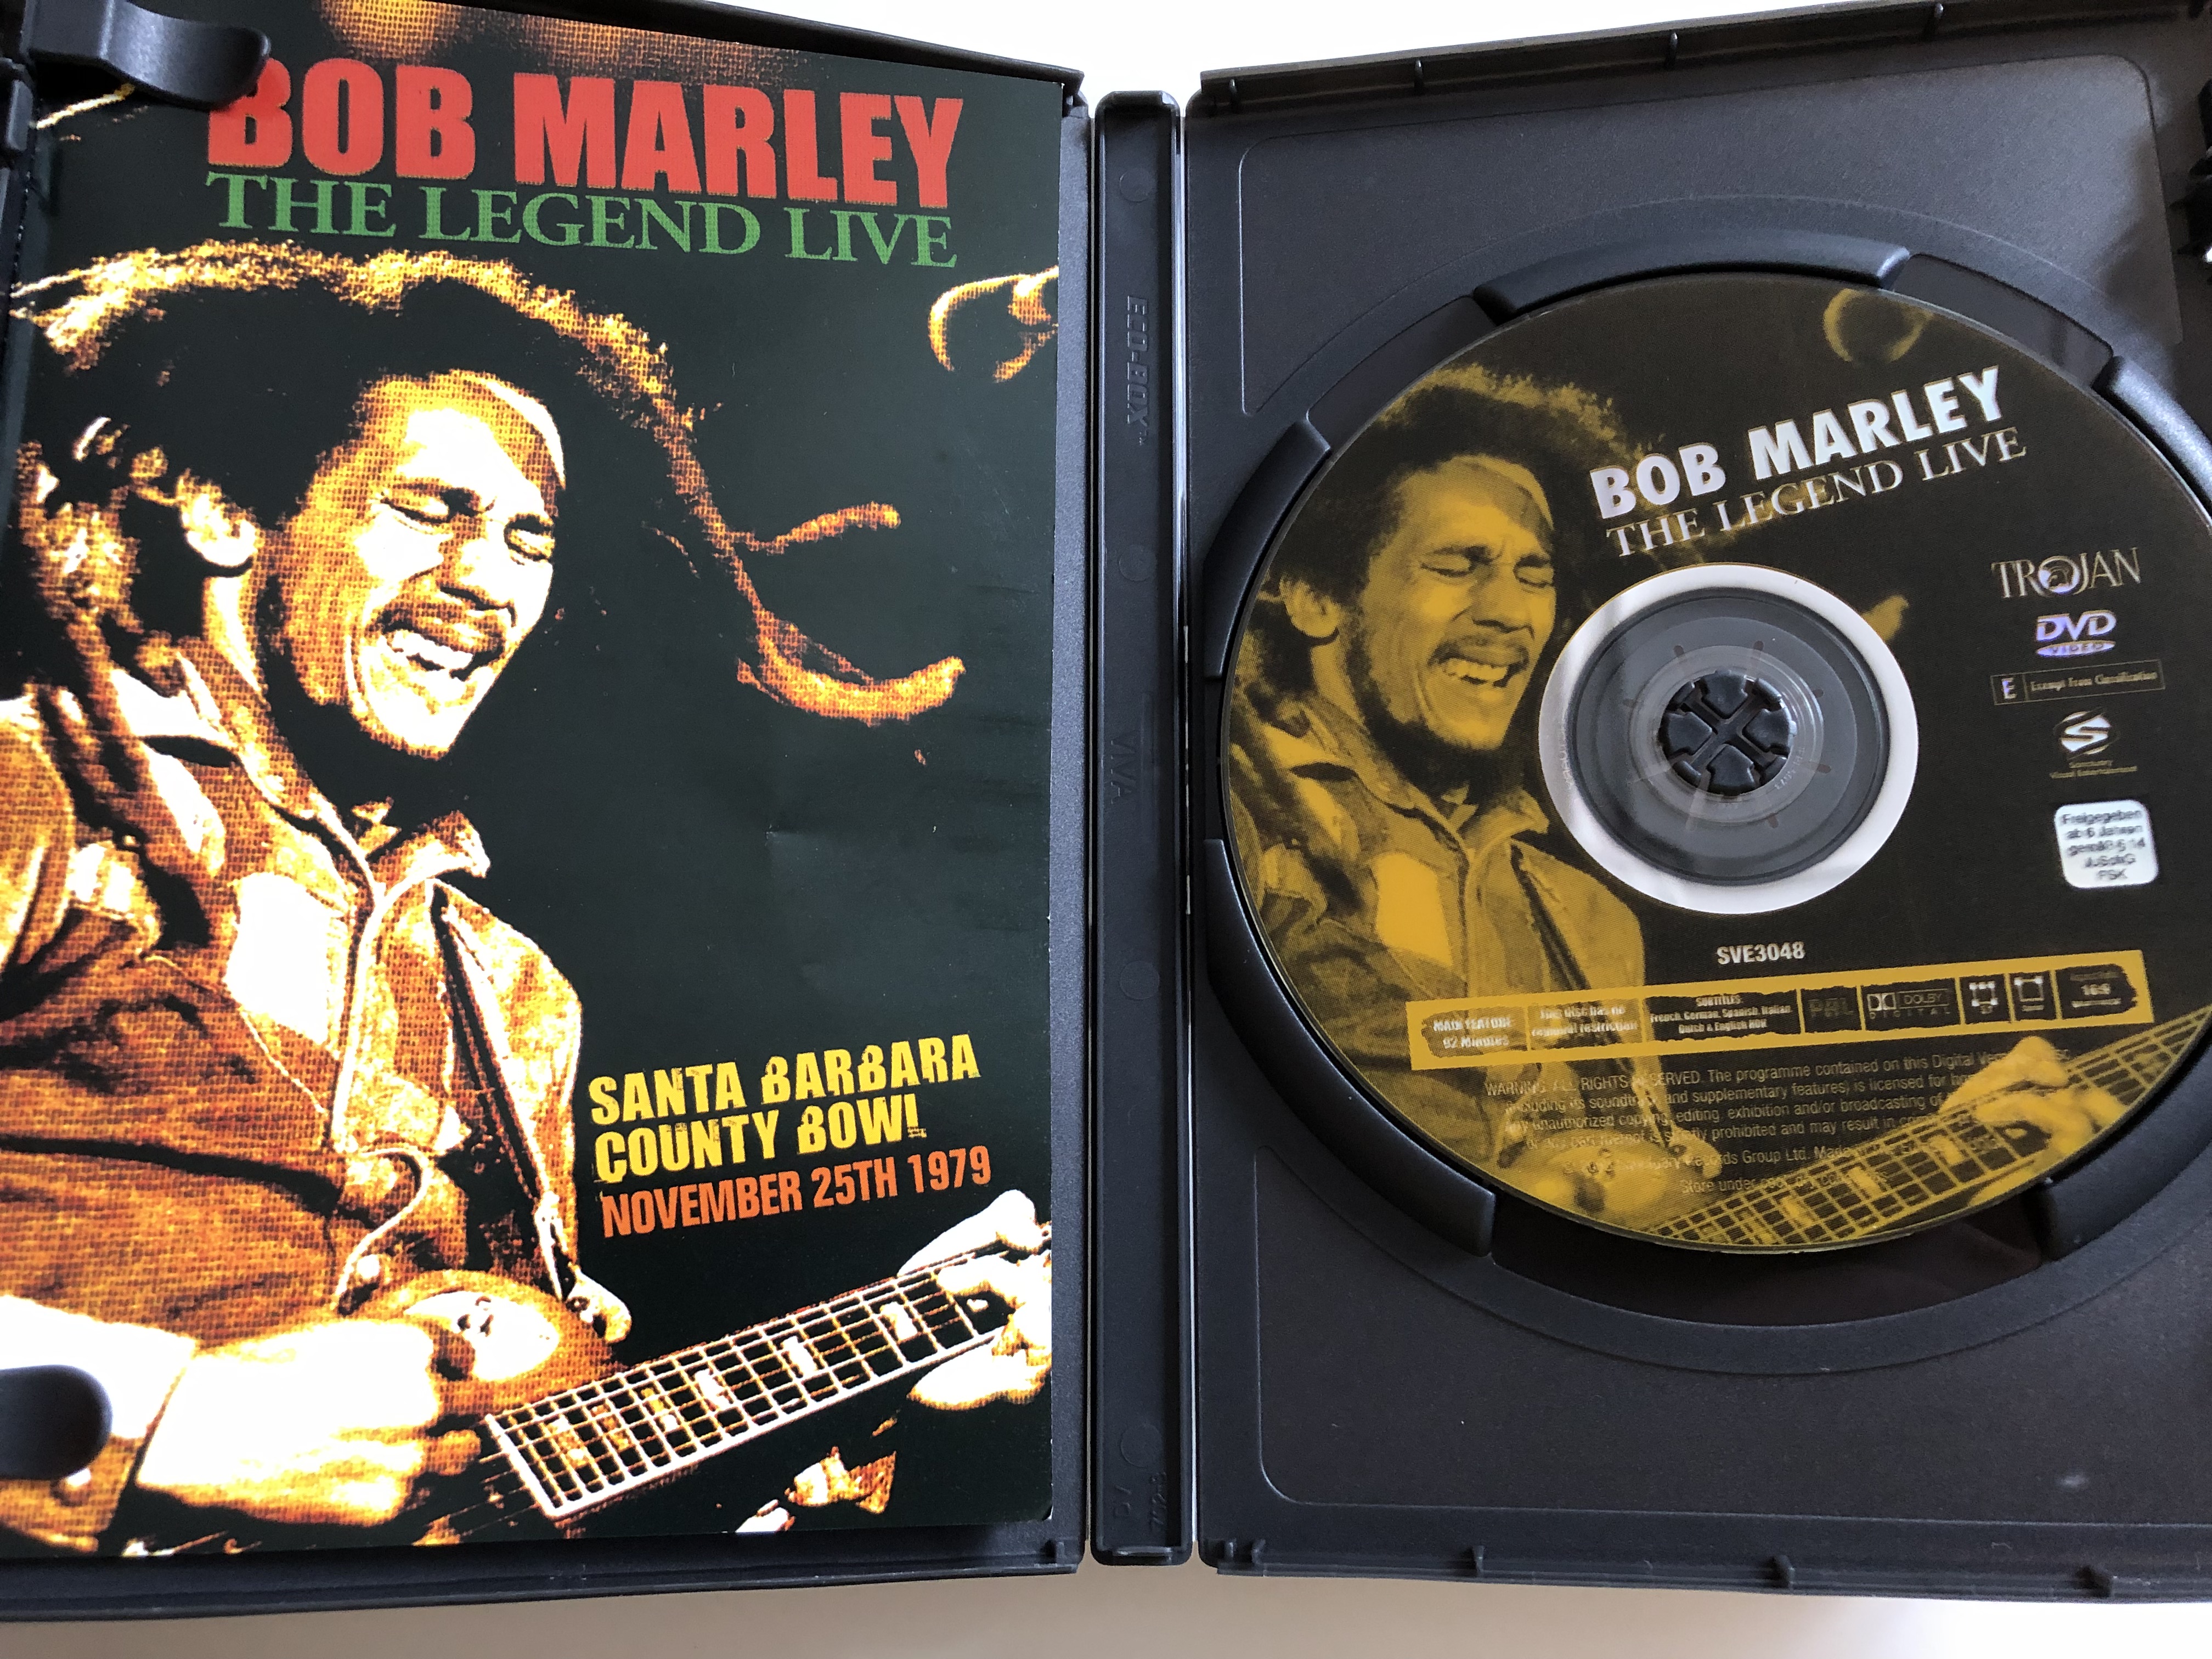 Bob Marley The Legend - Live DVD 2003 Santa Barbara County Bowl / November  25th 1979 / SVE 30048 - bibleinmylanguage